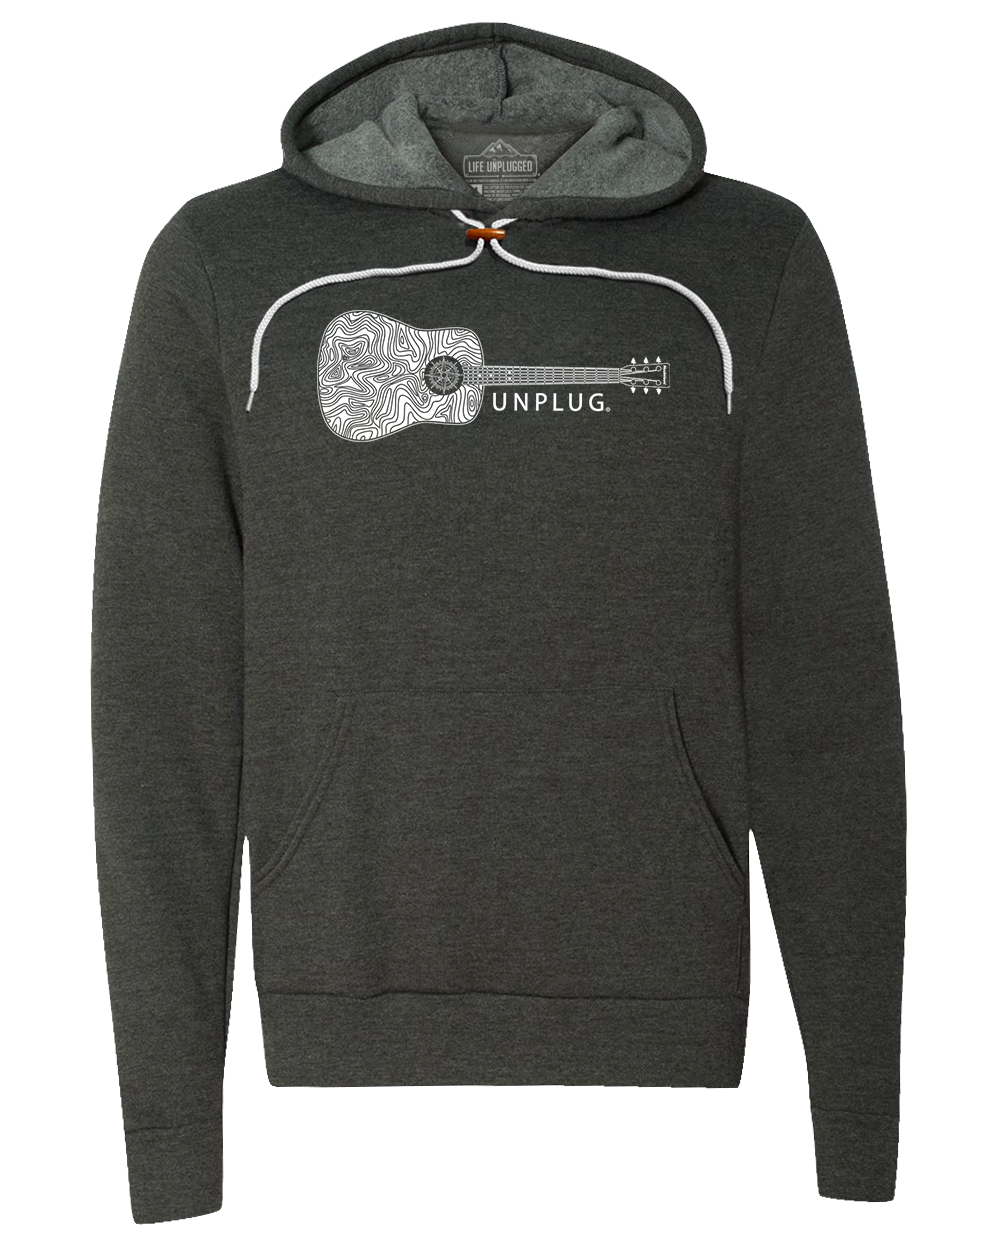 Guitar Premium Super Soft Hooded Sweatshirt - Life Unplugged